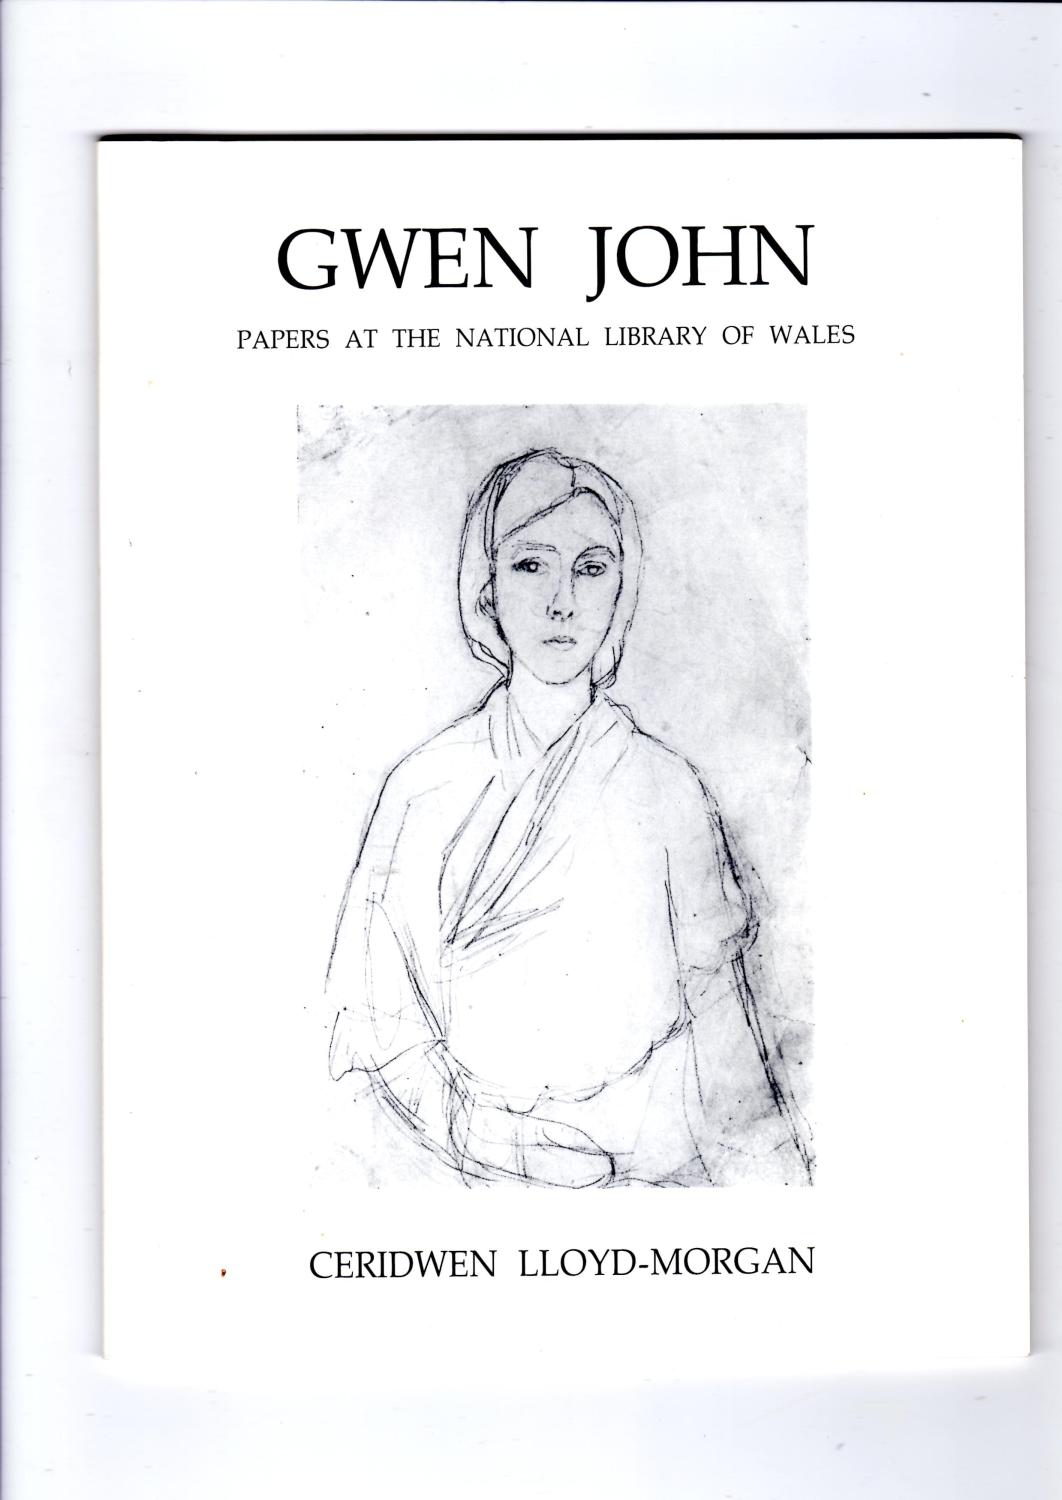 Gwen John papers at the National Library of Wales - Ceridwen Lloyd-Morgan